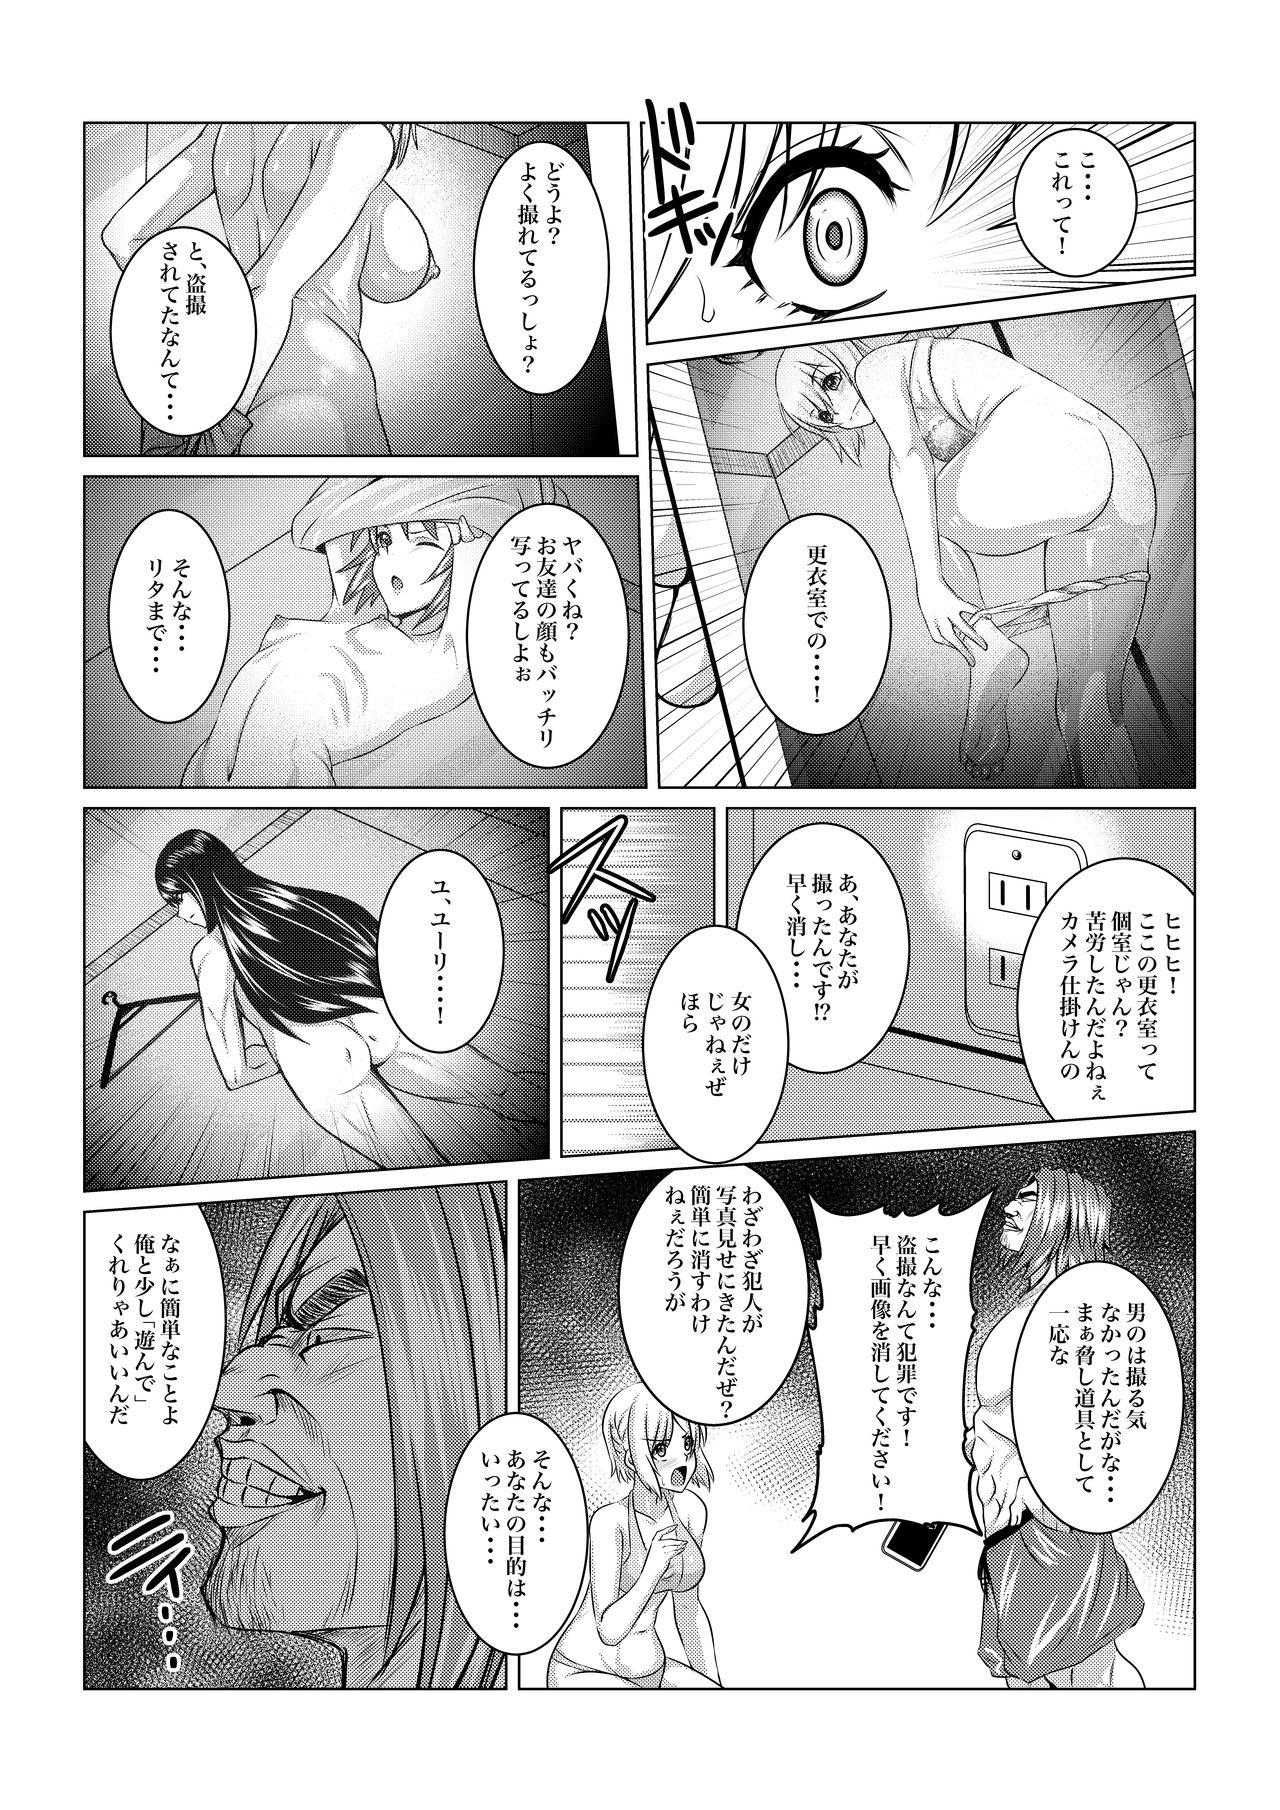 Japan Gekka Midarezaki - Tales of vesperia Movies - Page 7